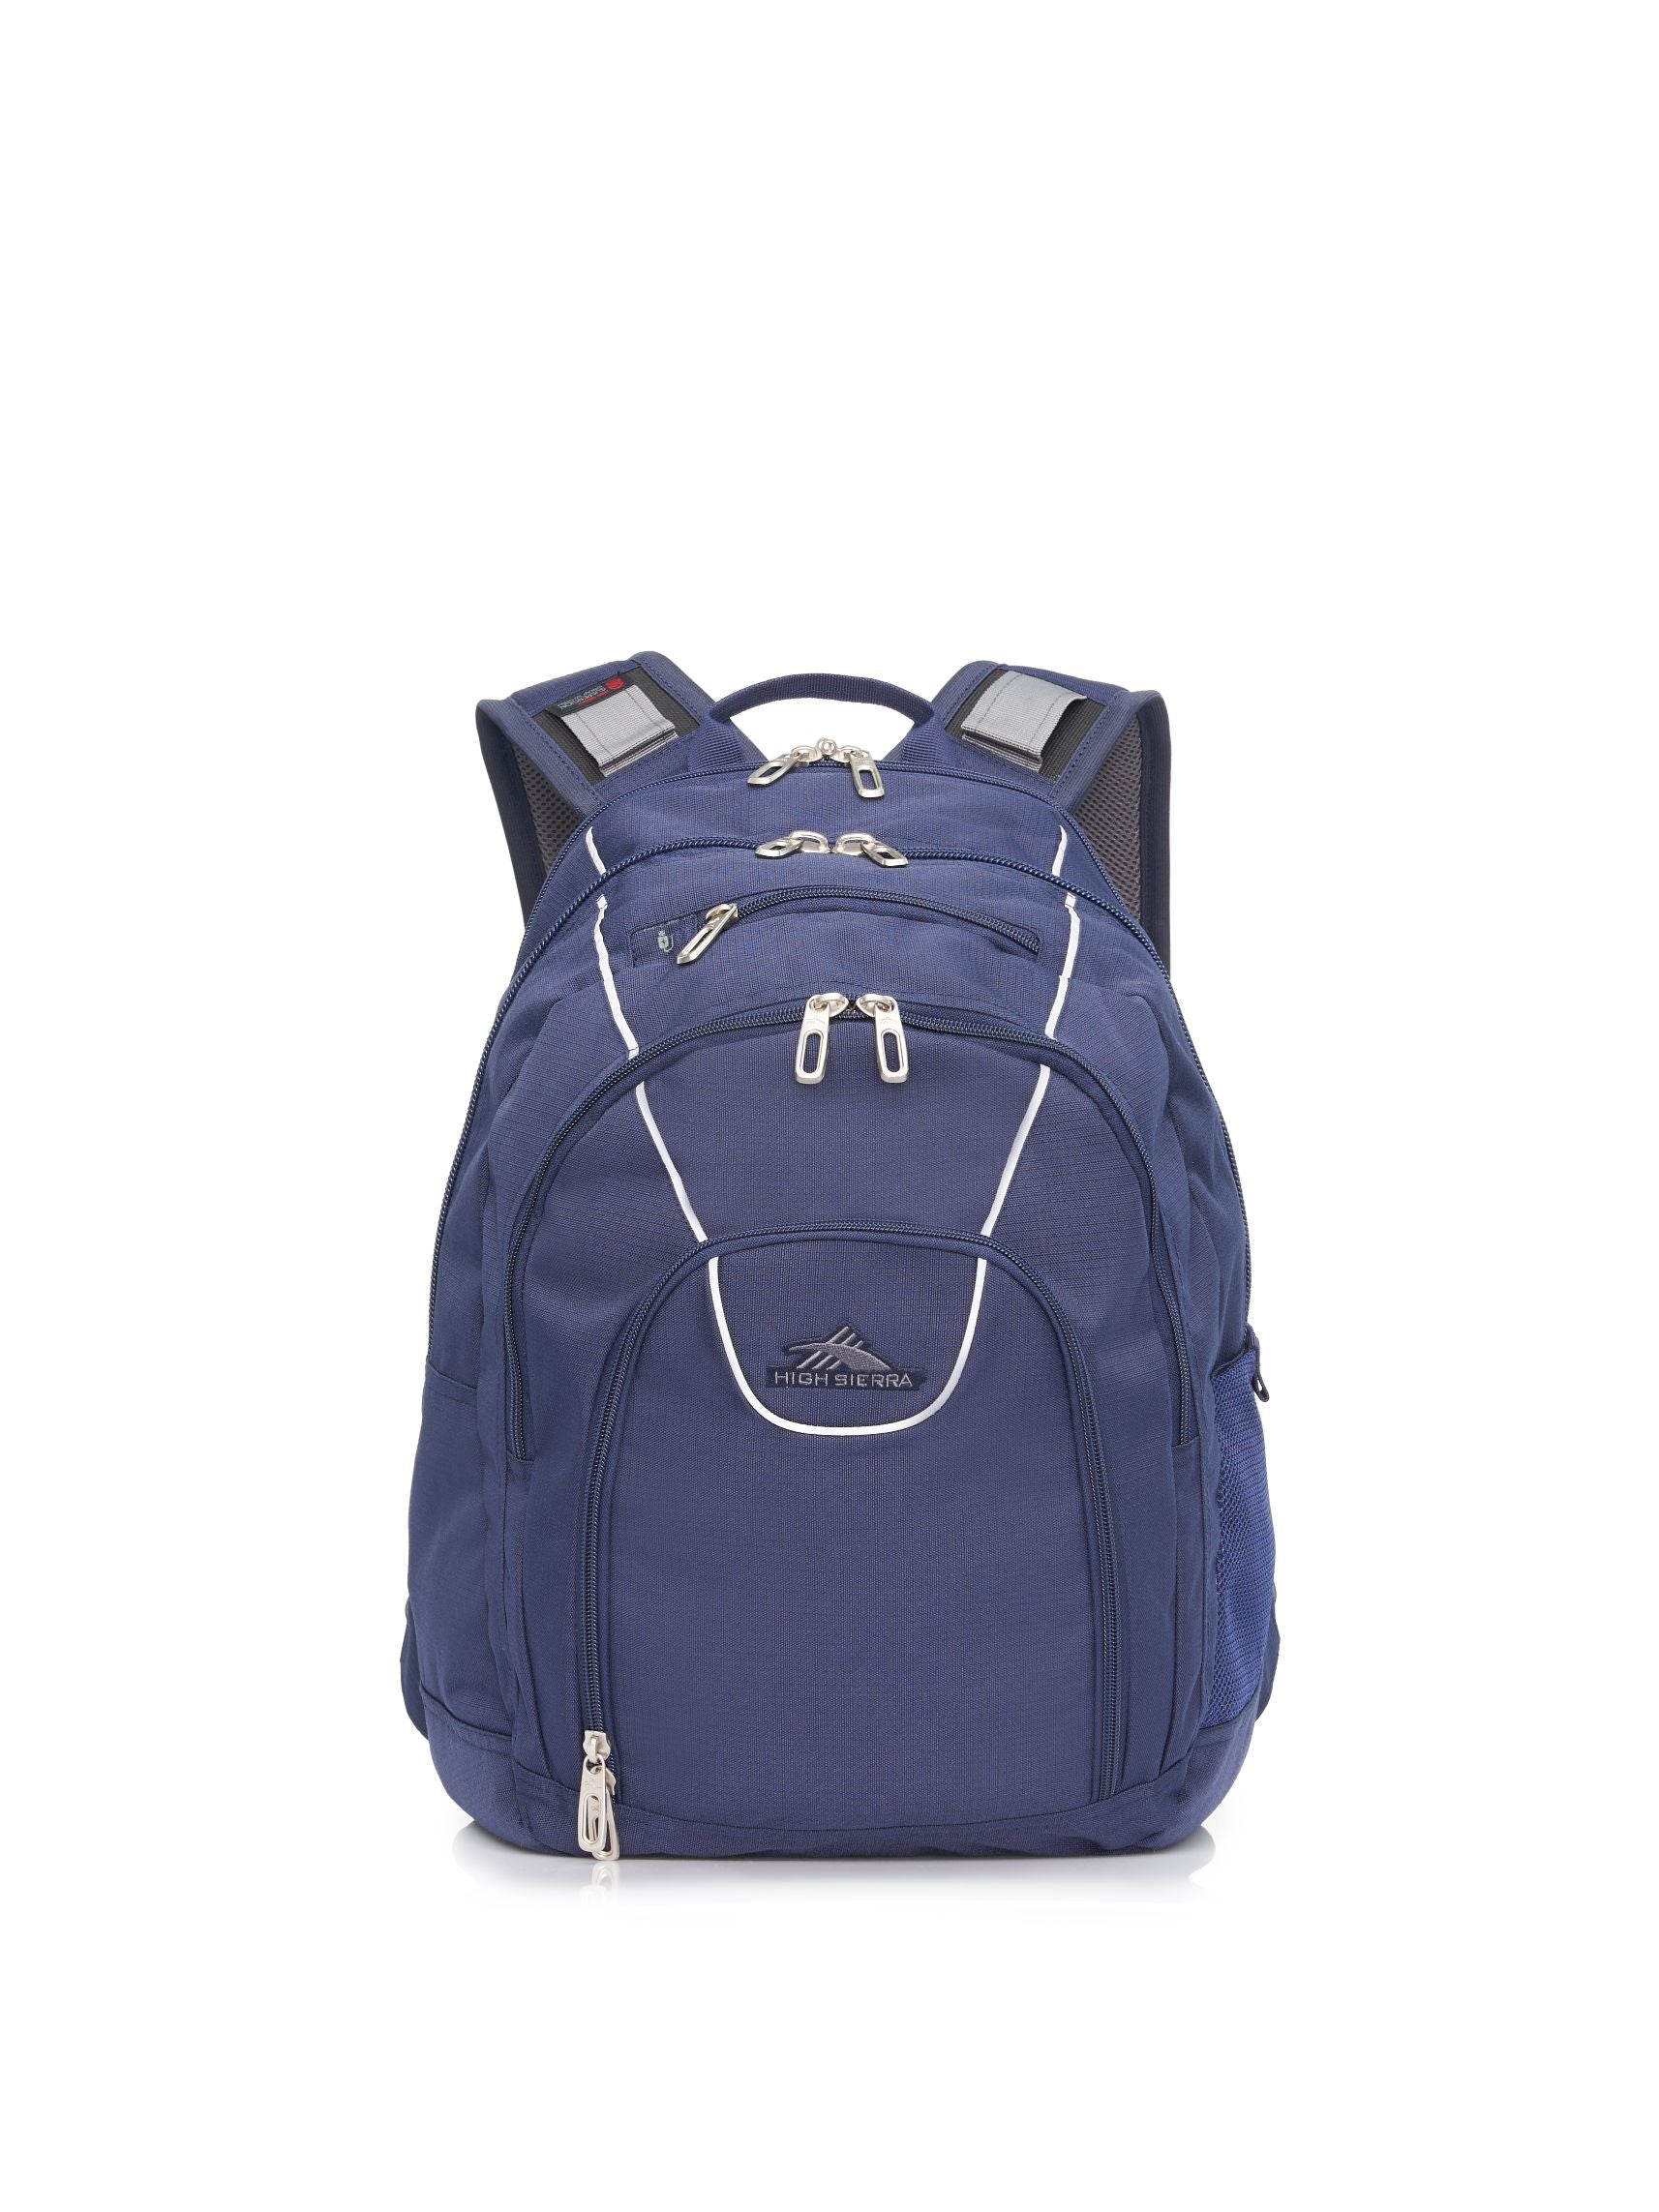 High Sierra - Academy 3.0 Backpack - Marine Blue